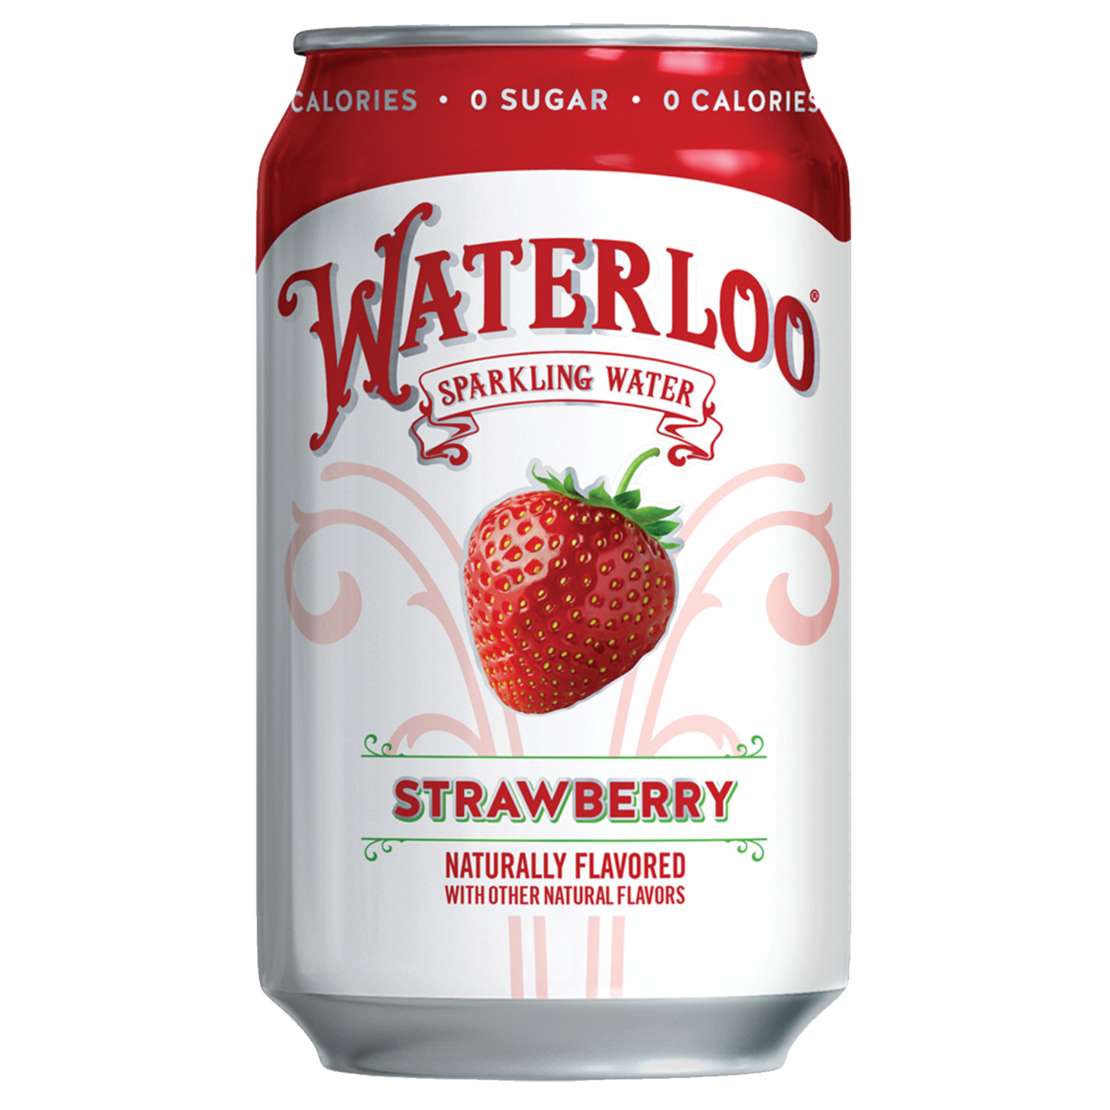 Waterloo sparkling water strawberry